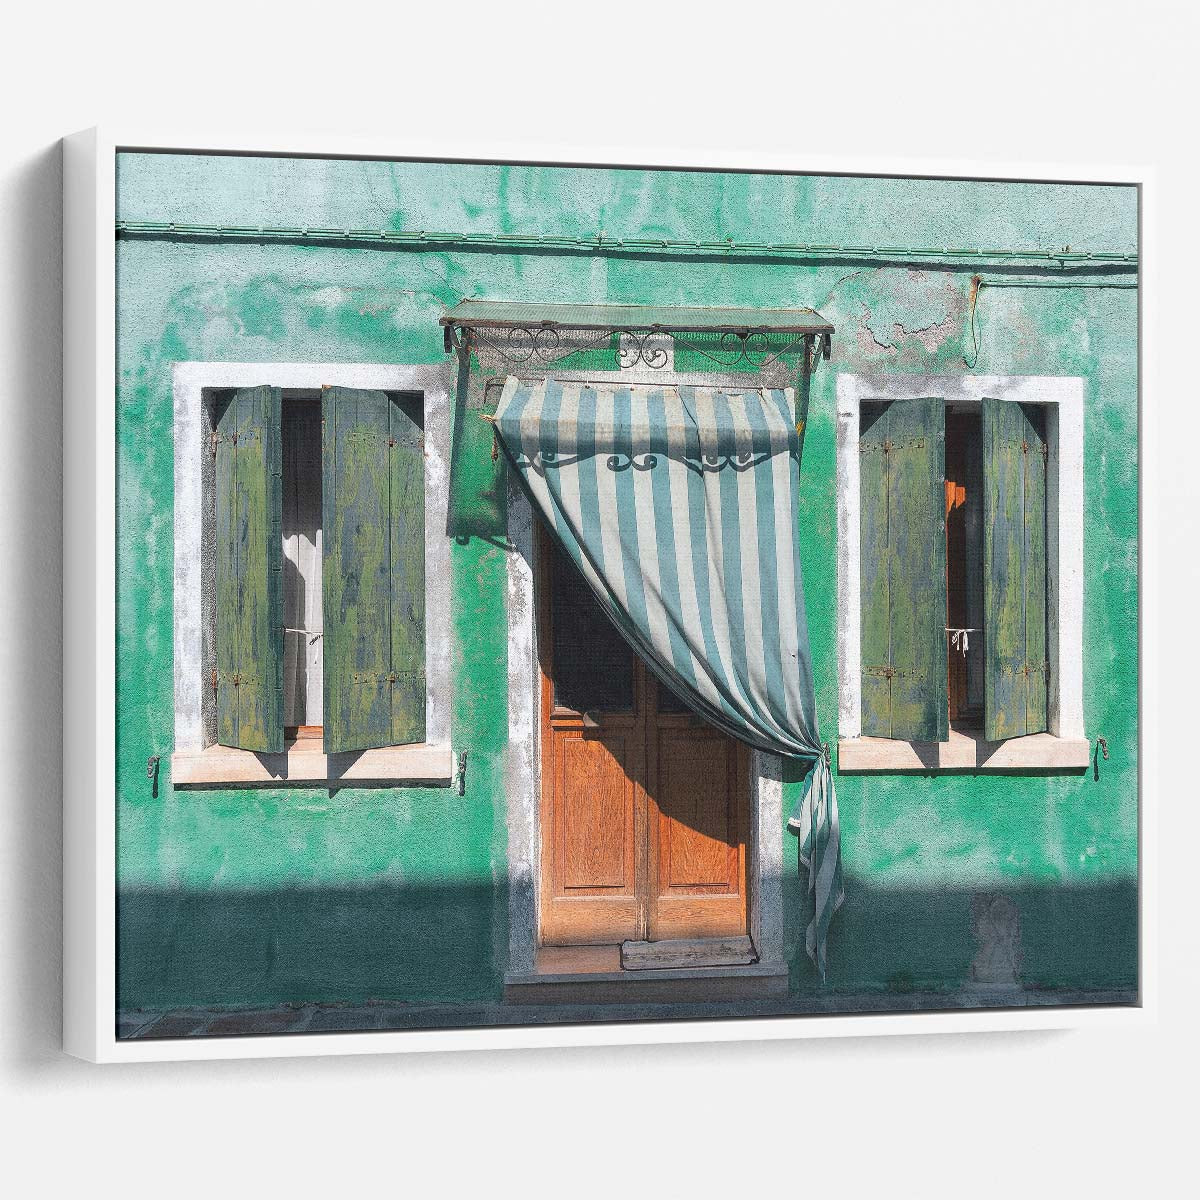 Venetian Green Shuttered Window Facade Wall Art by Luxuriance Designs. Made in USA.